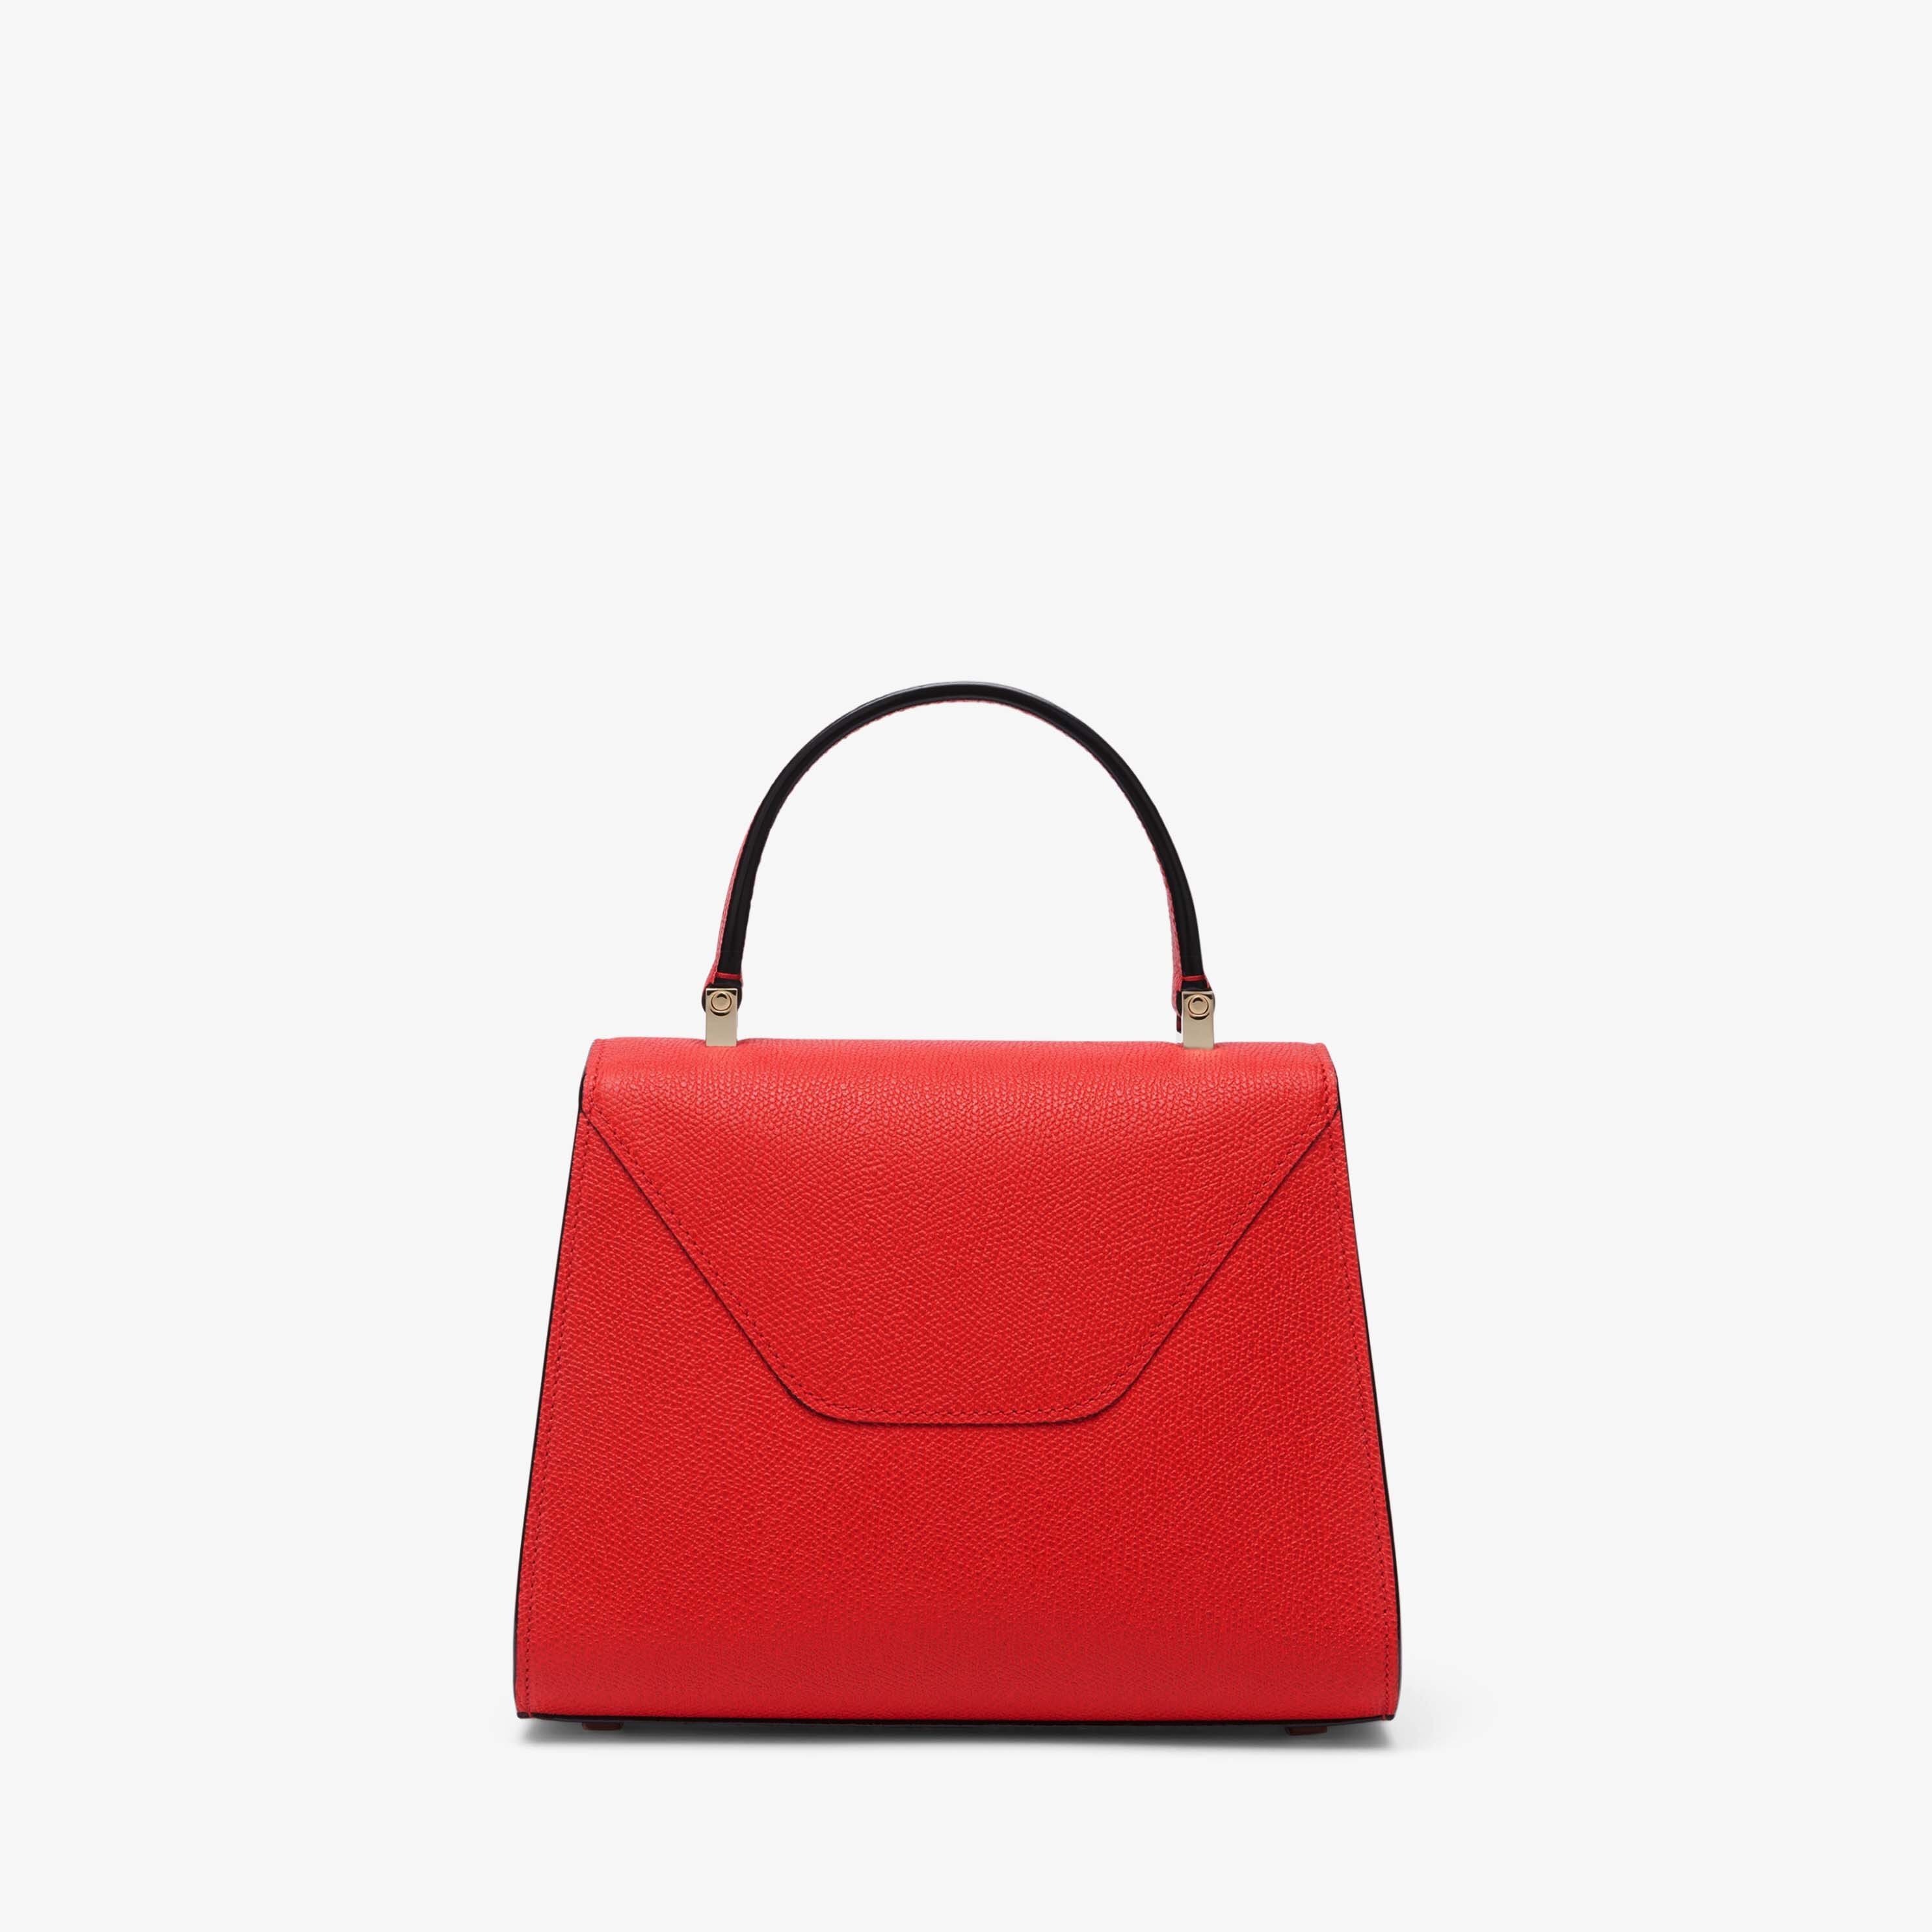 Iside Top handle mini bag - Love Red - Vitello VS - Valextra - 6